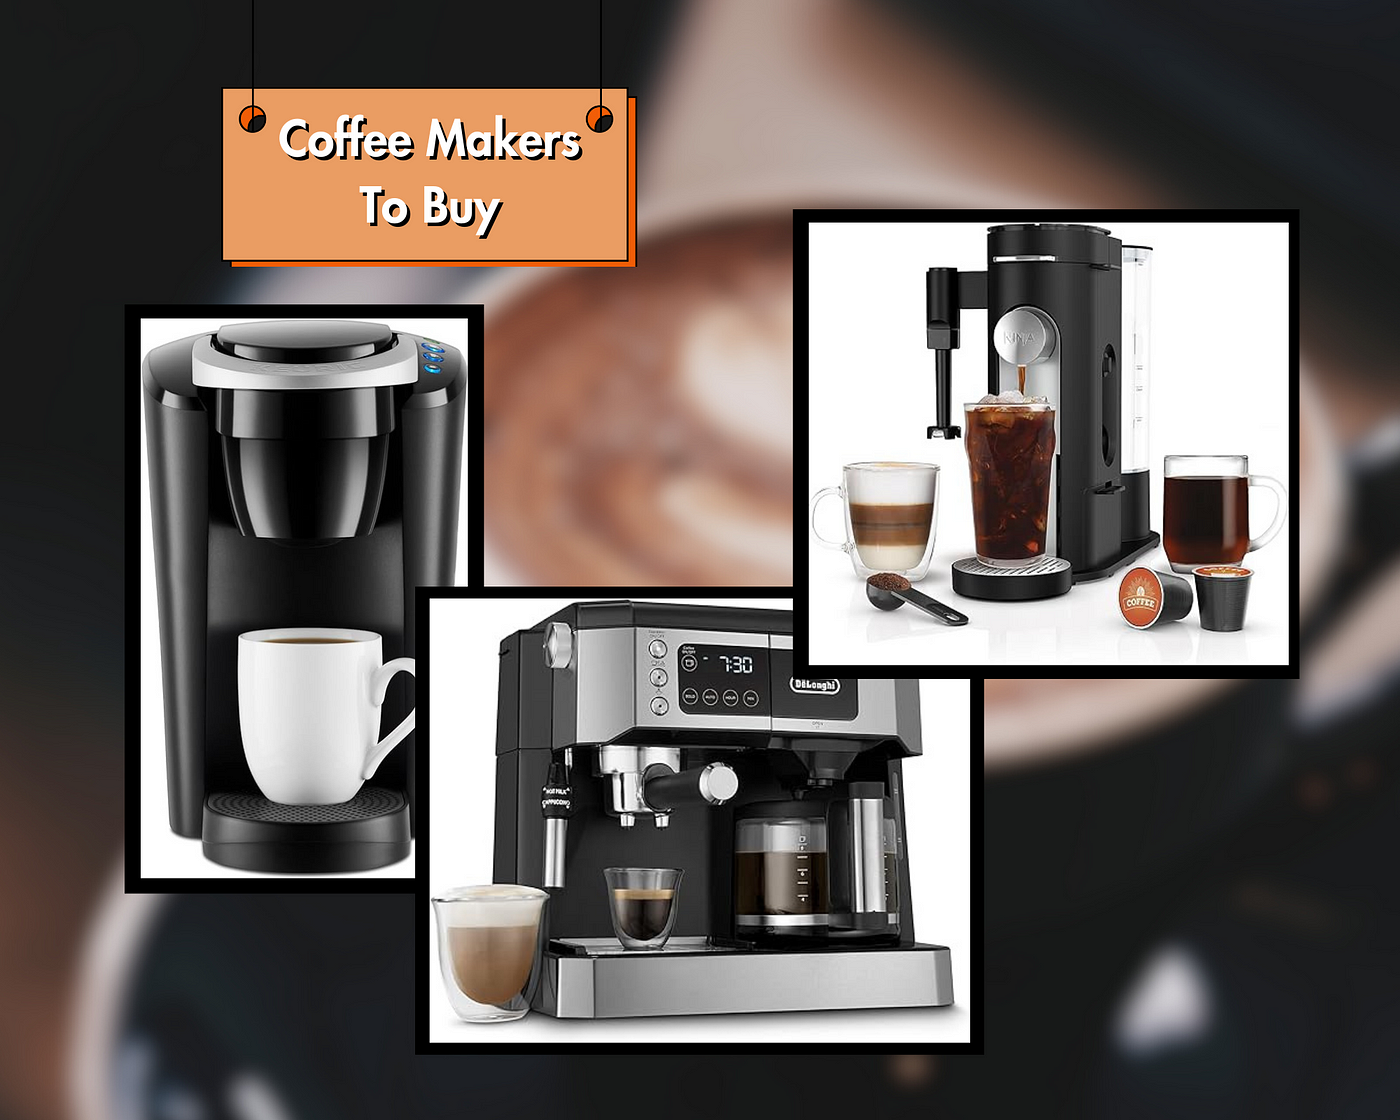 Ninja PB051 3-Cup Coffee Maker with Removable Reservoir - Black 